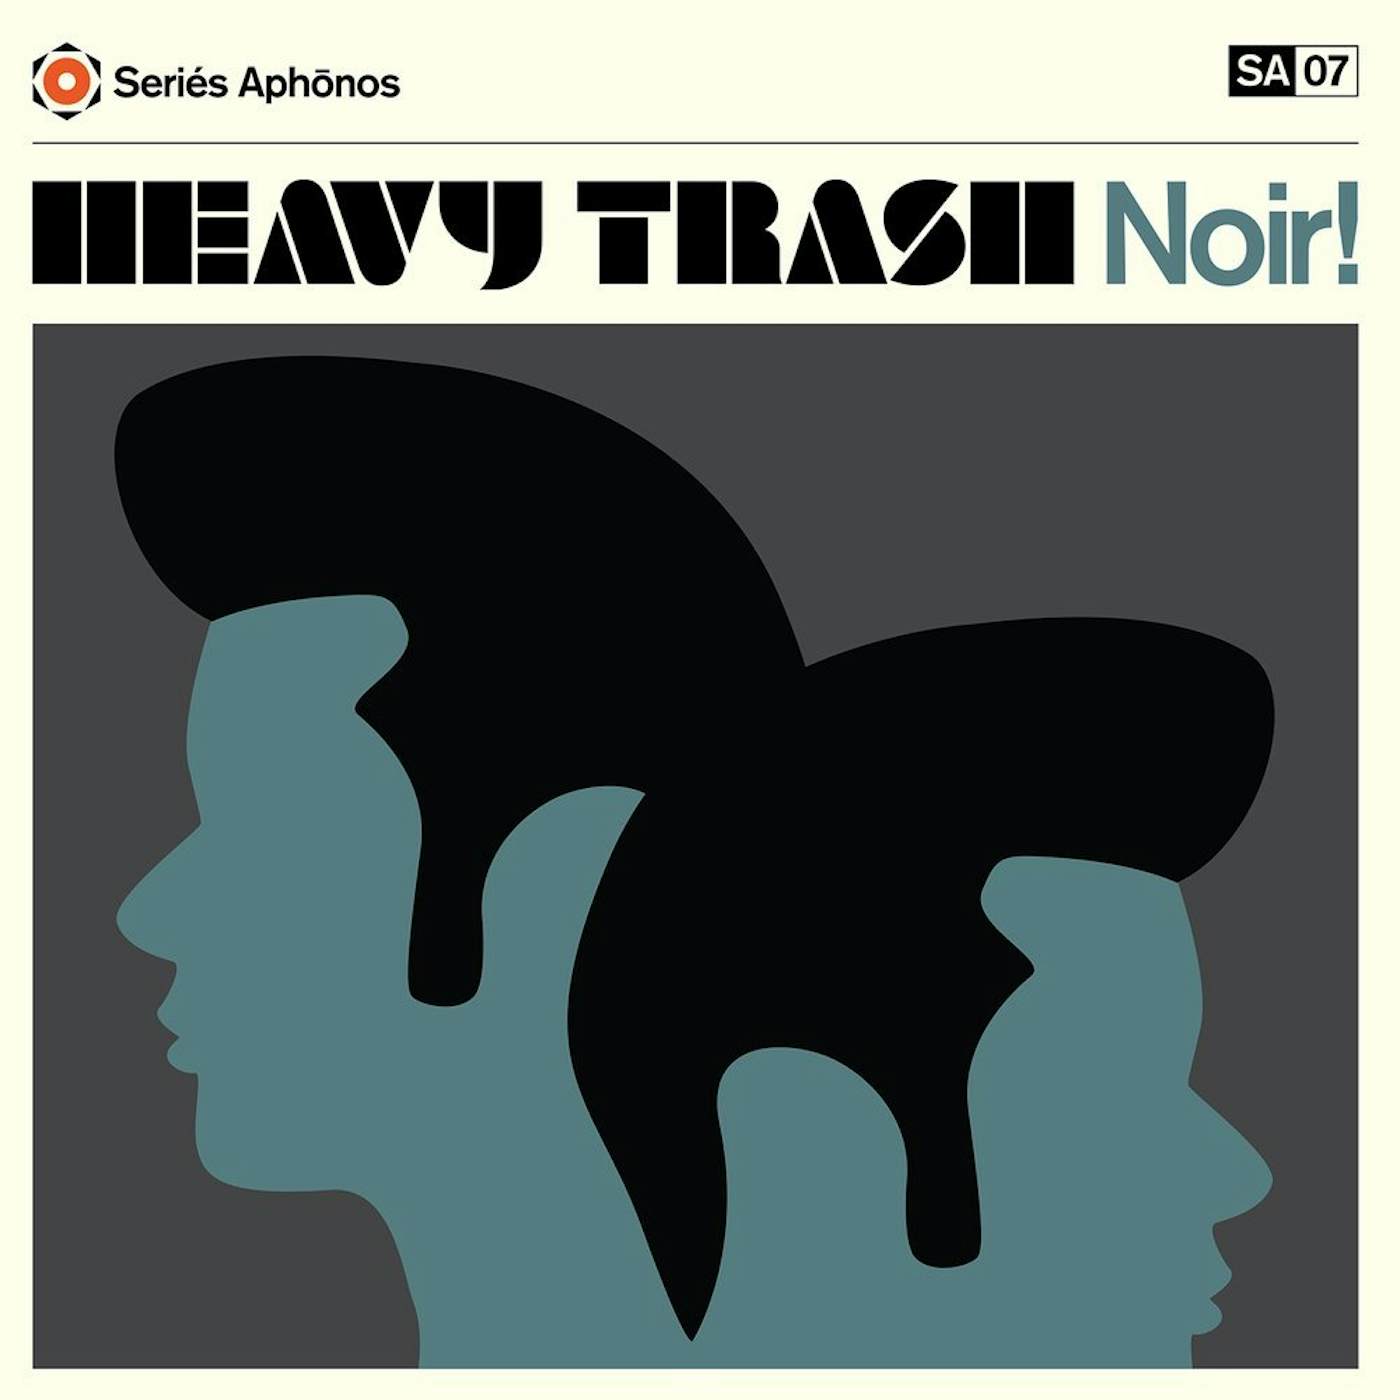 Heavy Trash NOIR Vinyl Record